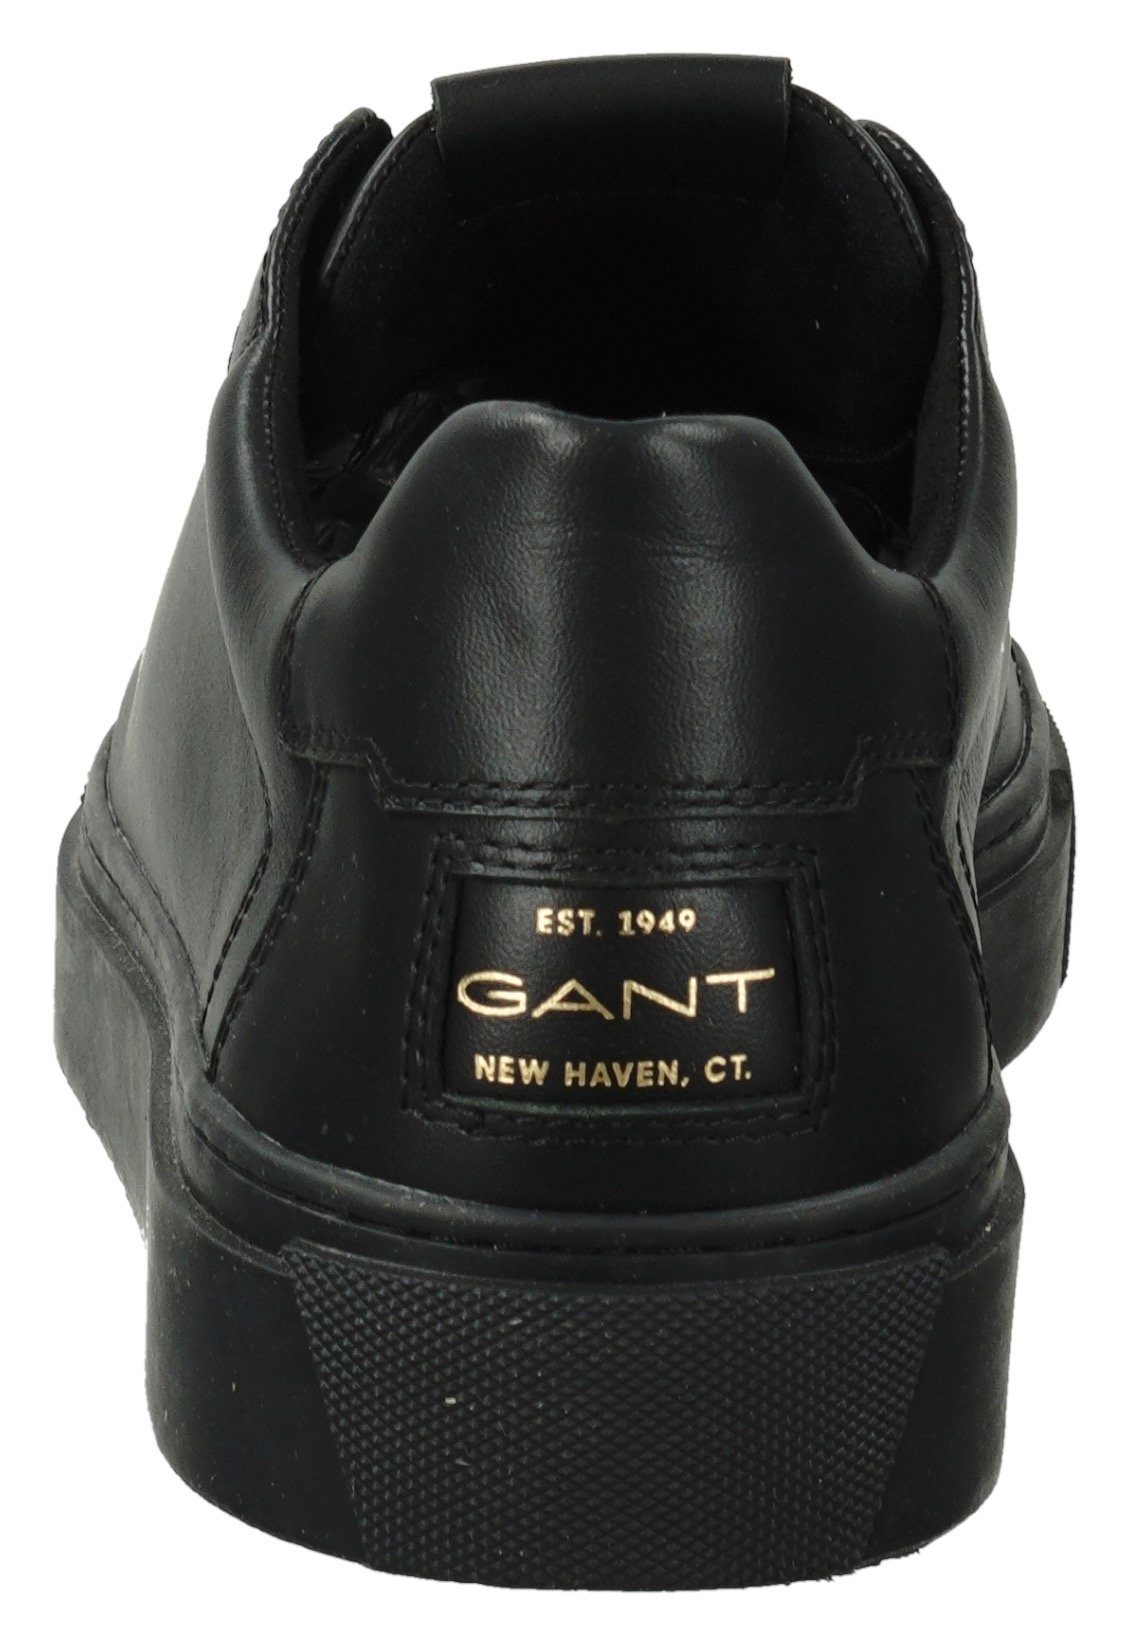 Gant MC JULIEN Lederinnensohle schwarz-uni Sneaker mit